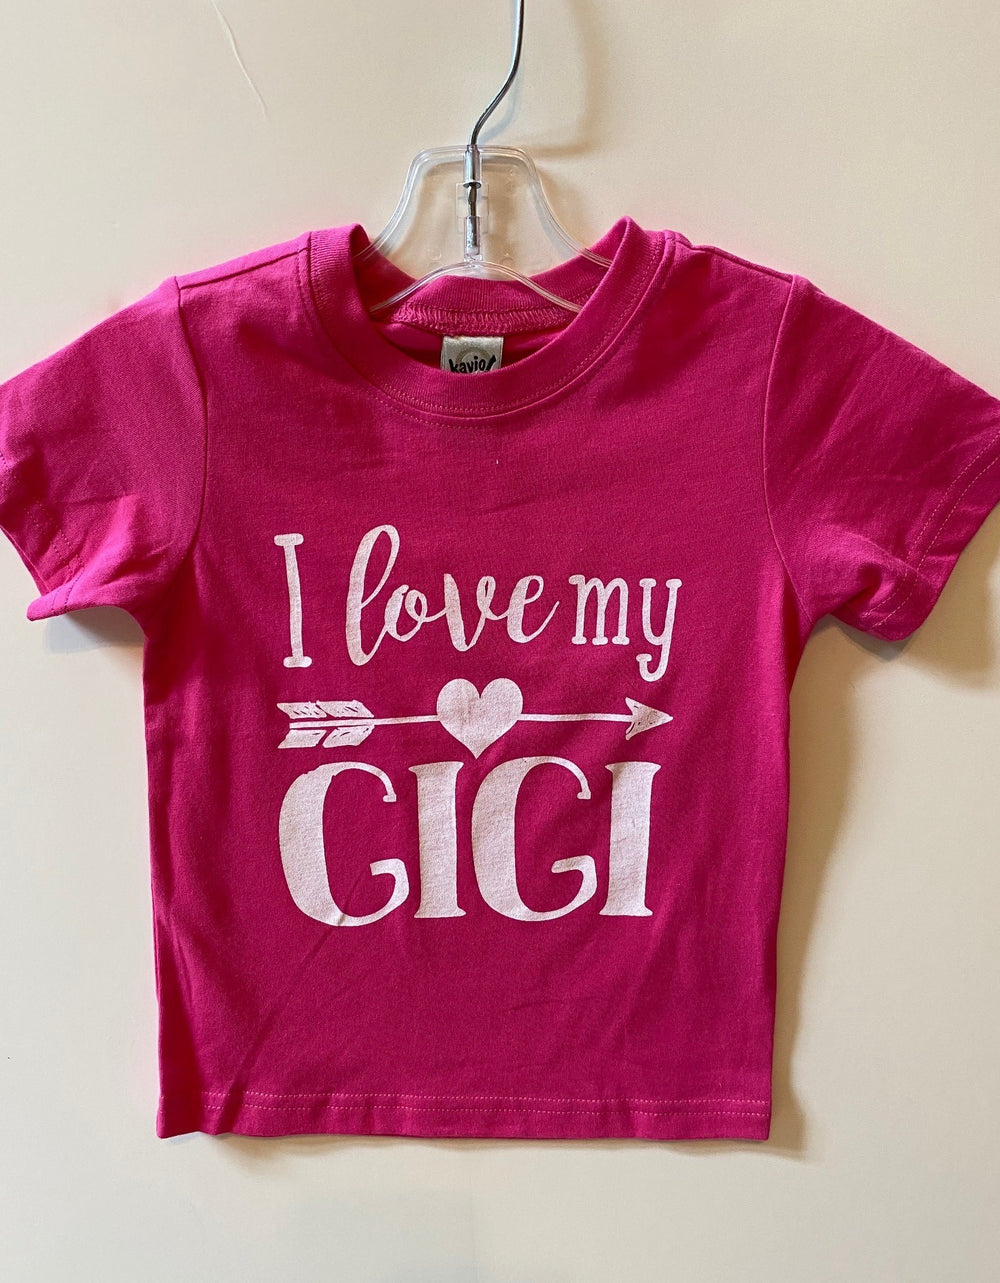 I Love my Gigi